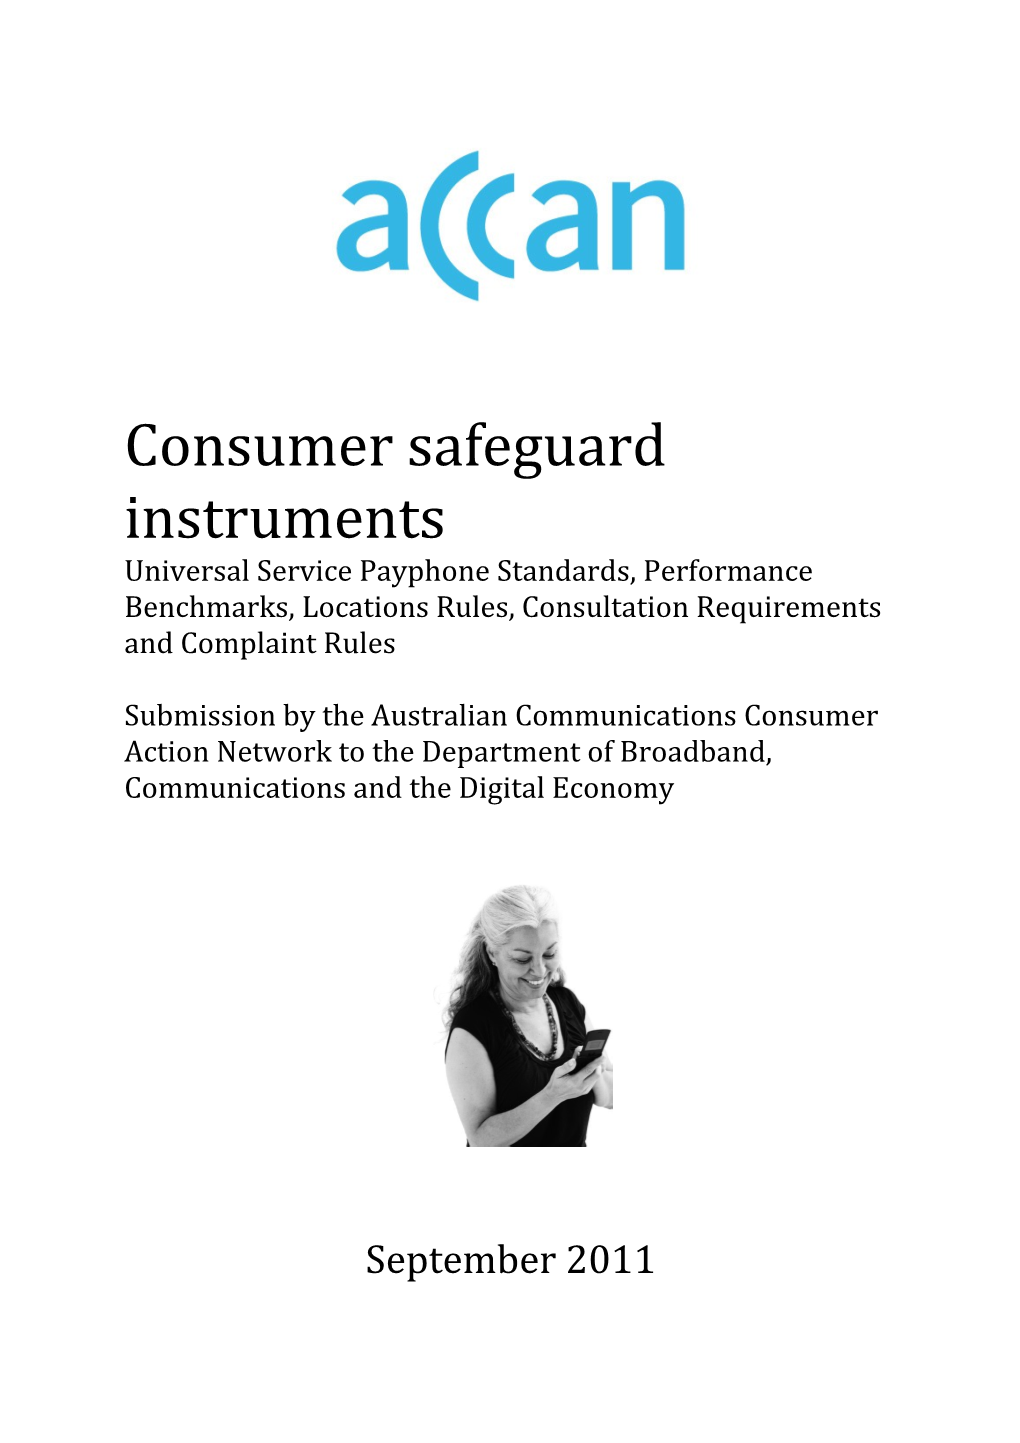 Consumer Safeguard Instruments